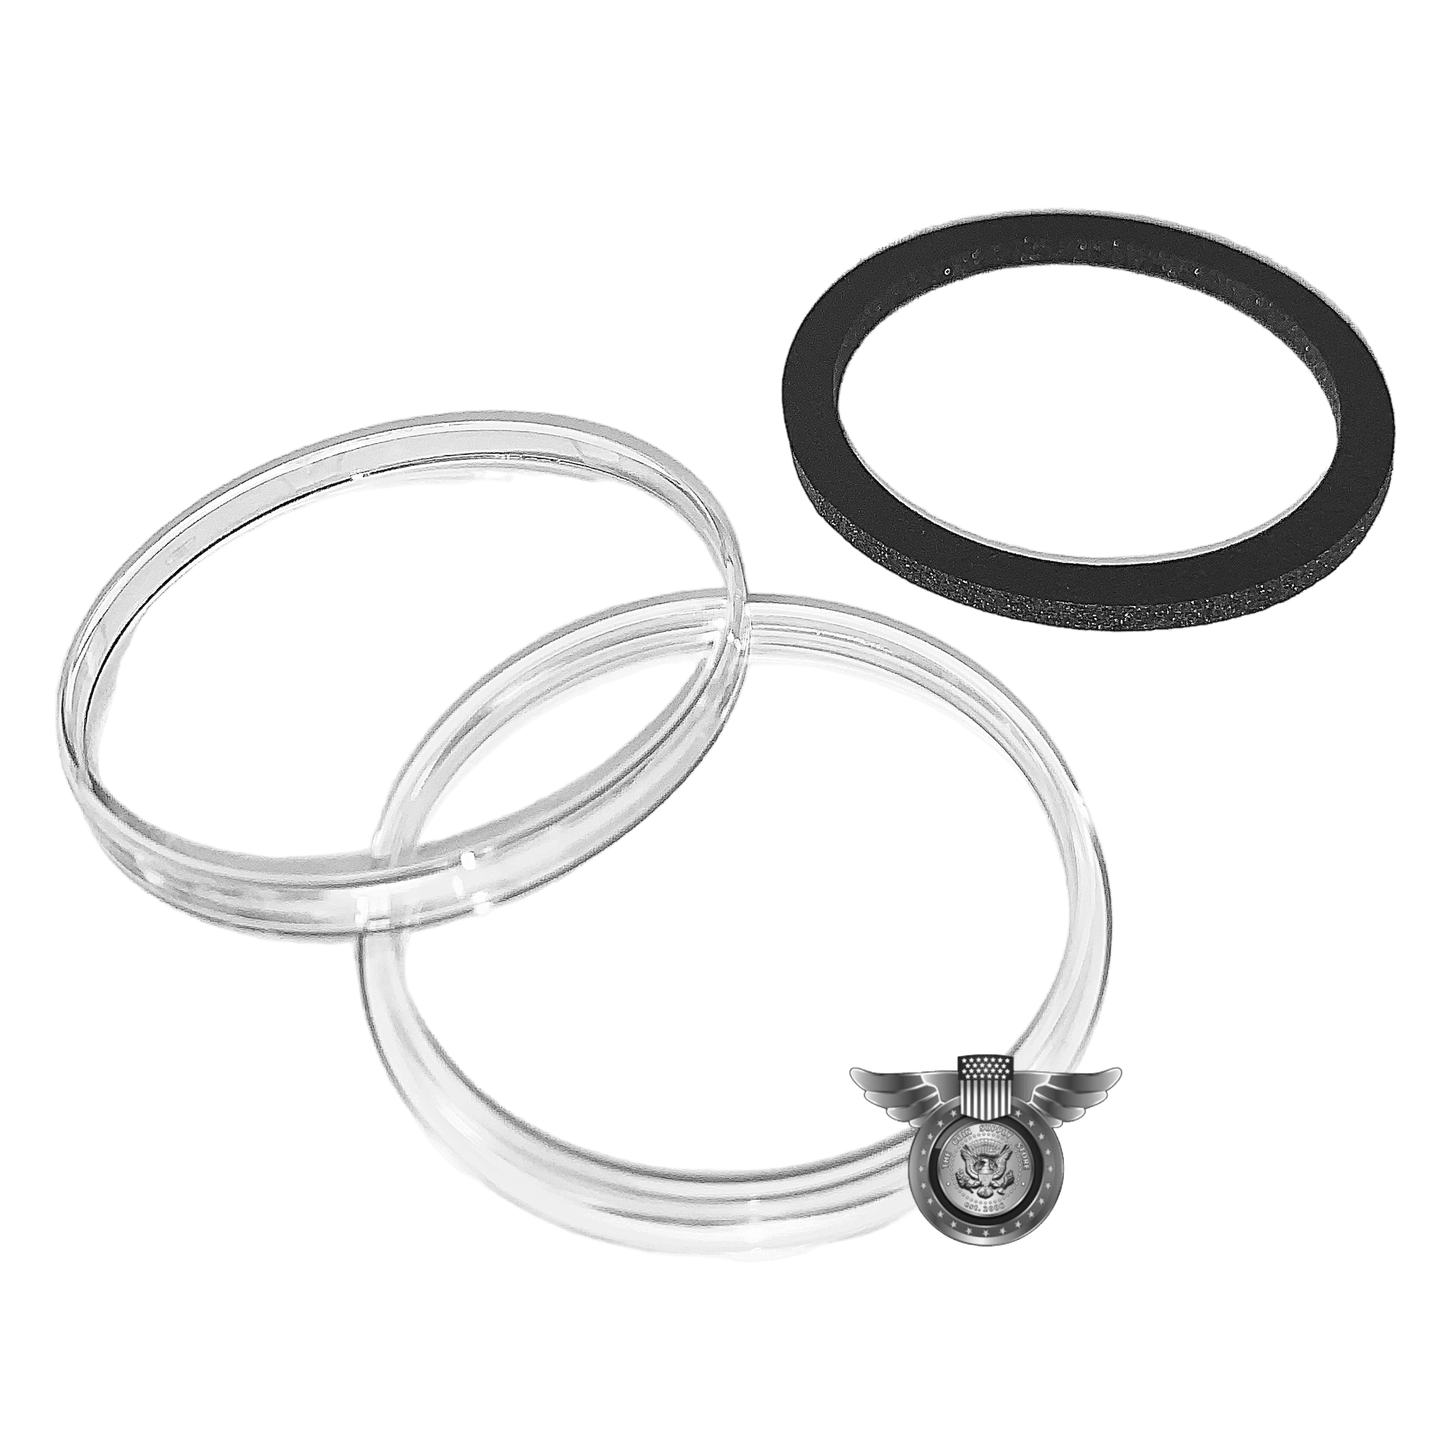 Ring Type Air-Tite Model I-Loop - 35mm Black (Ornament Holder)